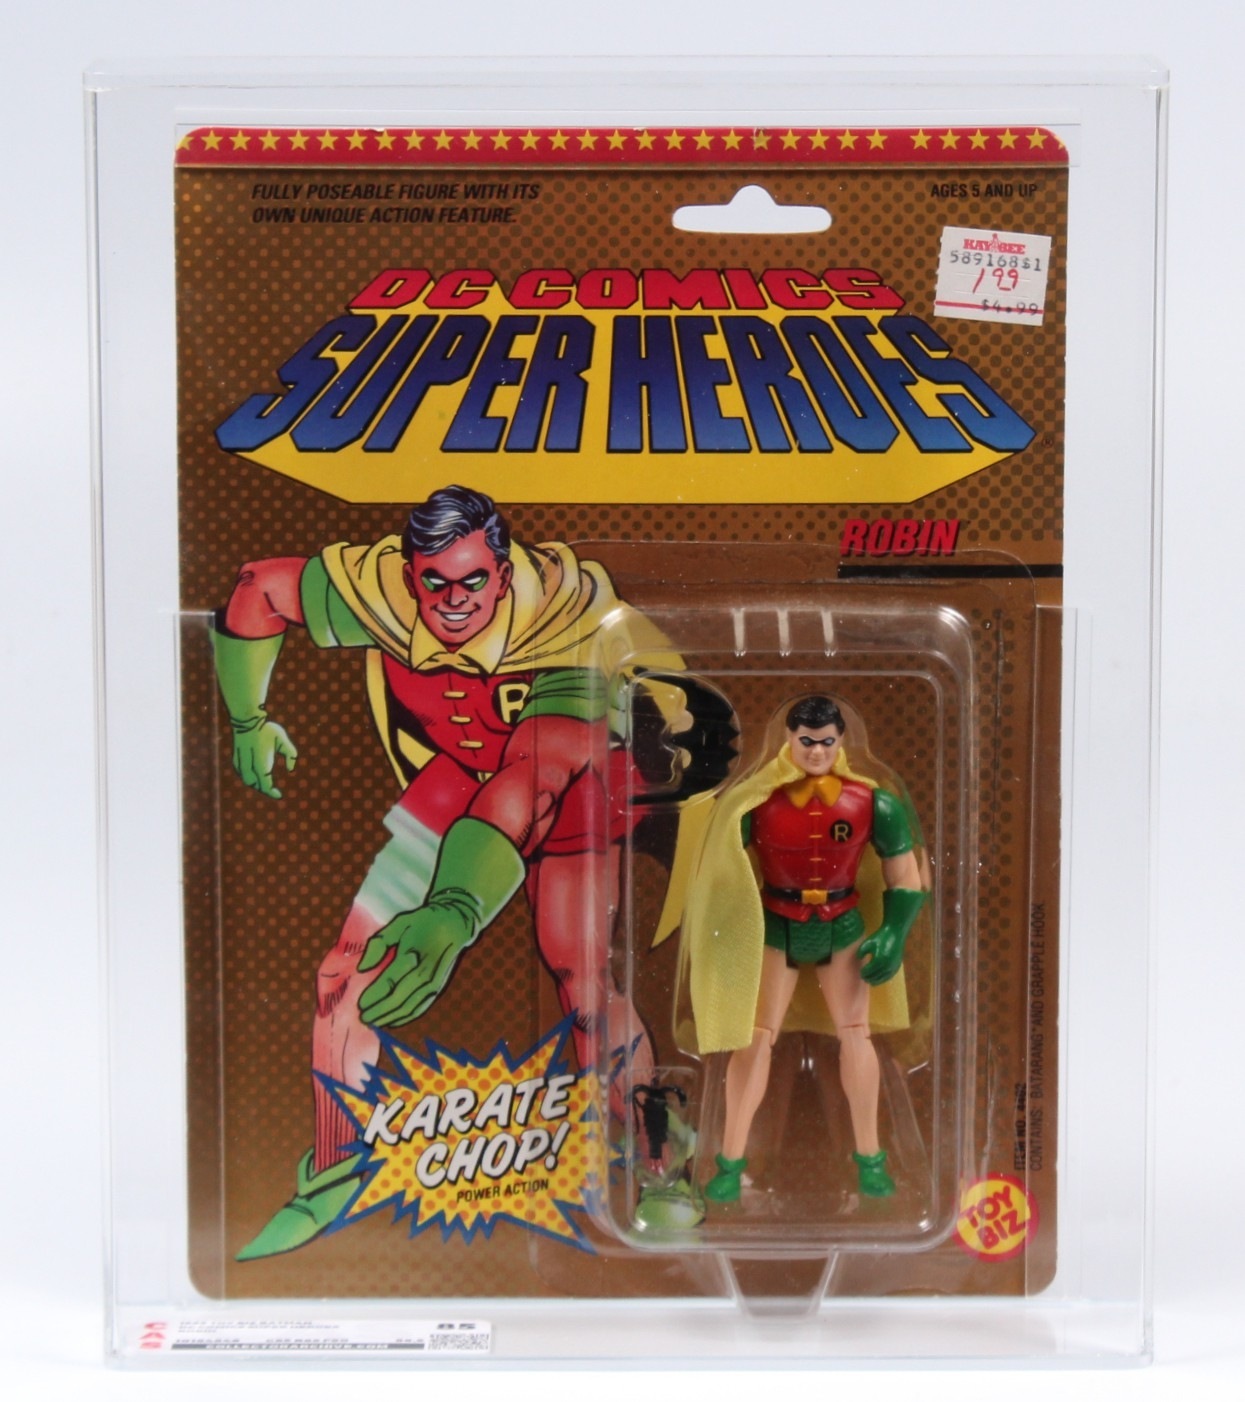 1989 Toy Biz Batman Carded Action Figure - Robin